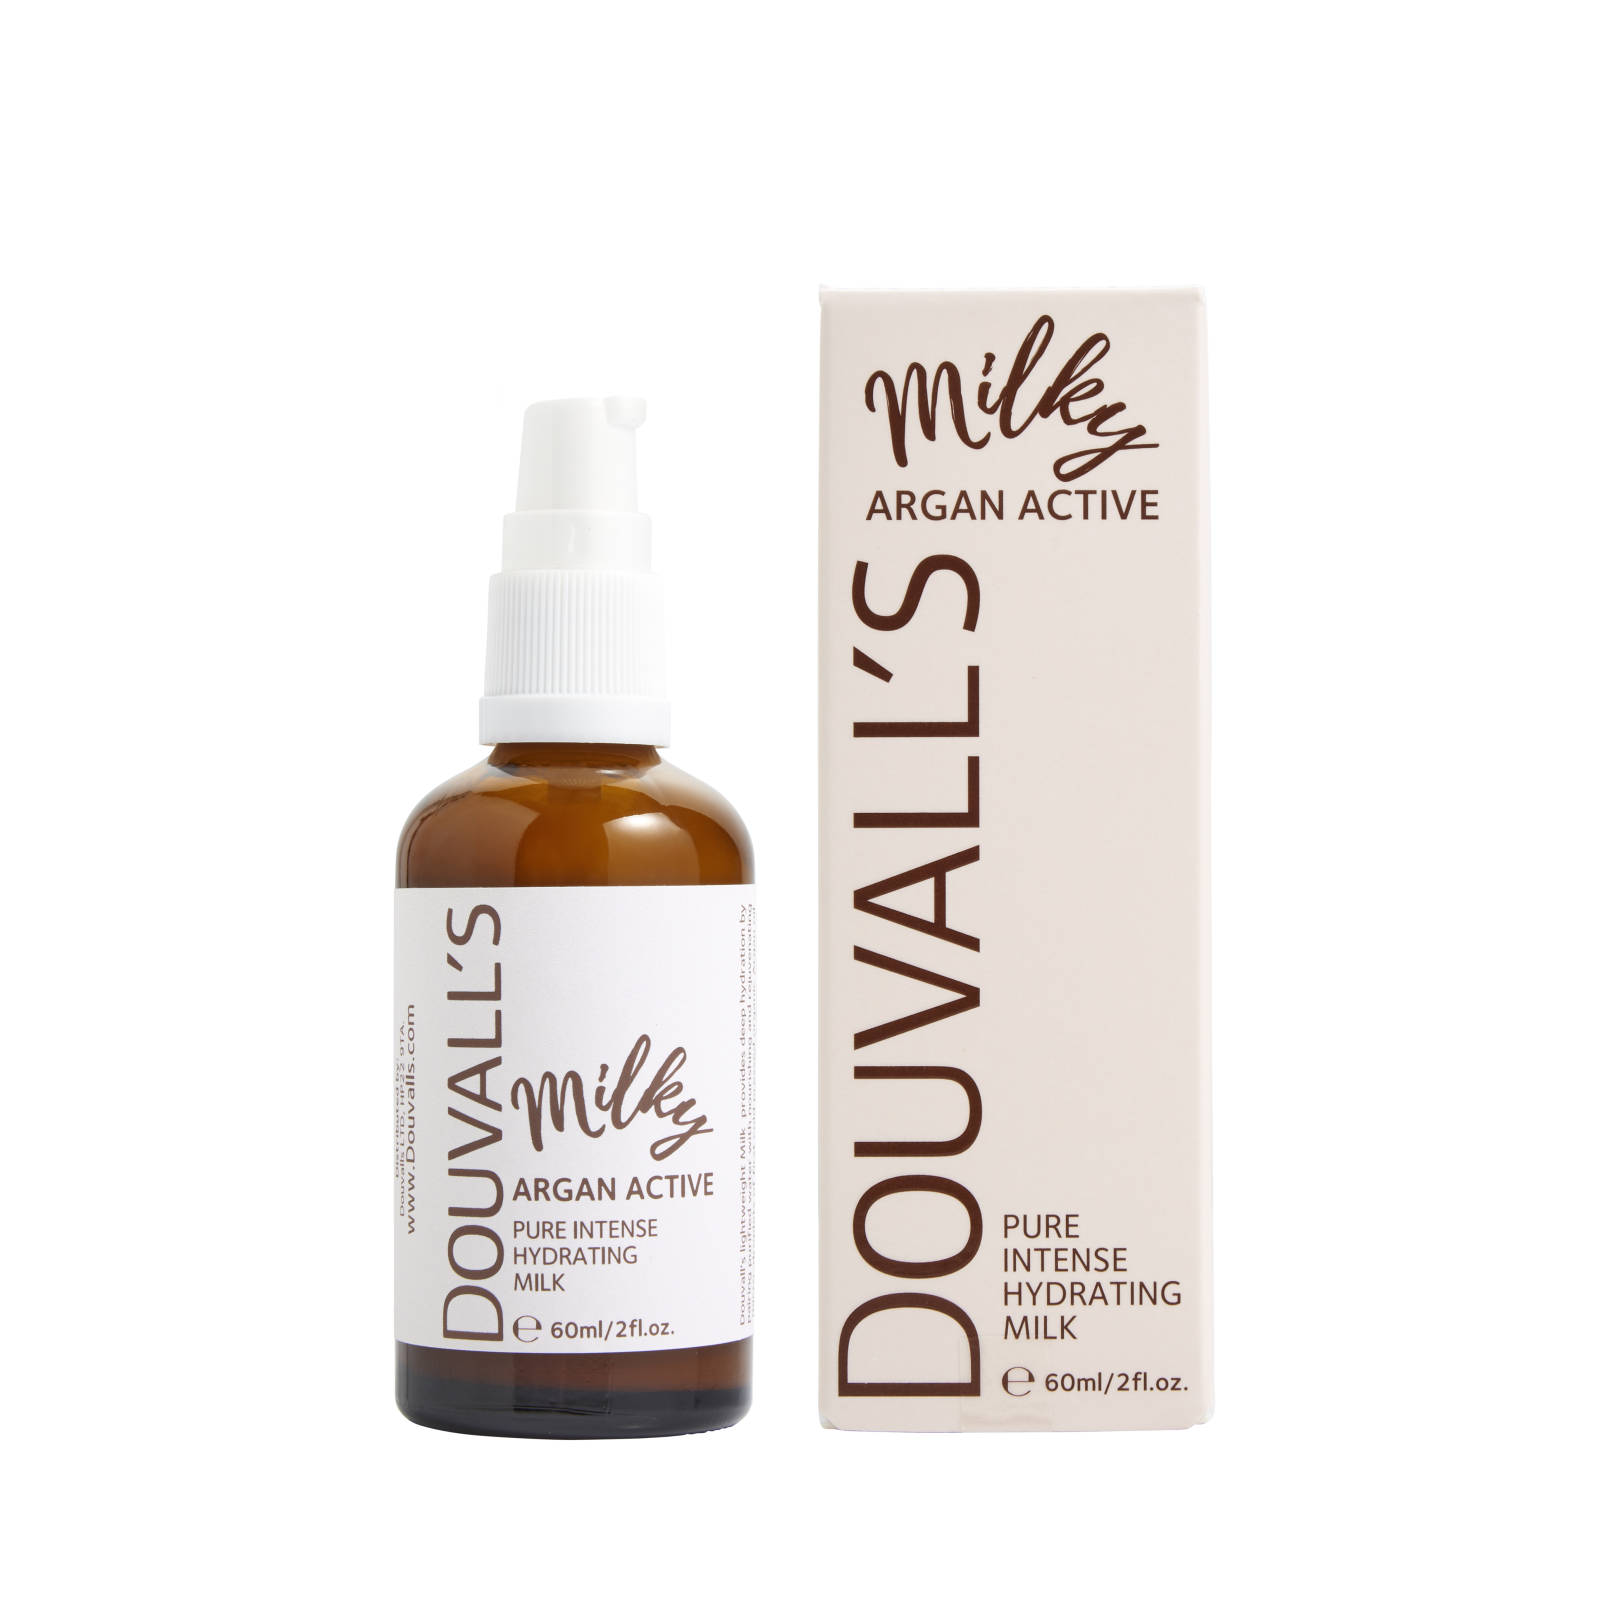 Douvall's Organic Milky Argan Active moisturiser 60ml